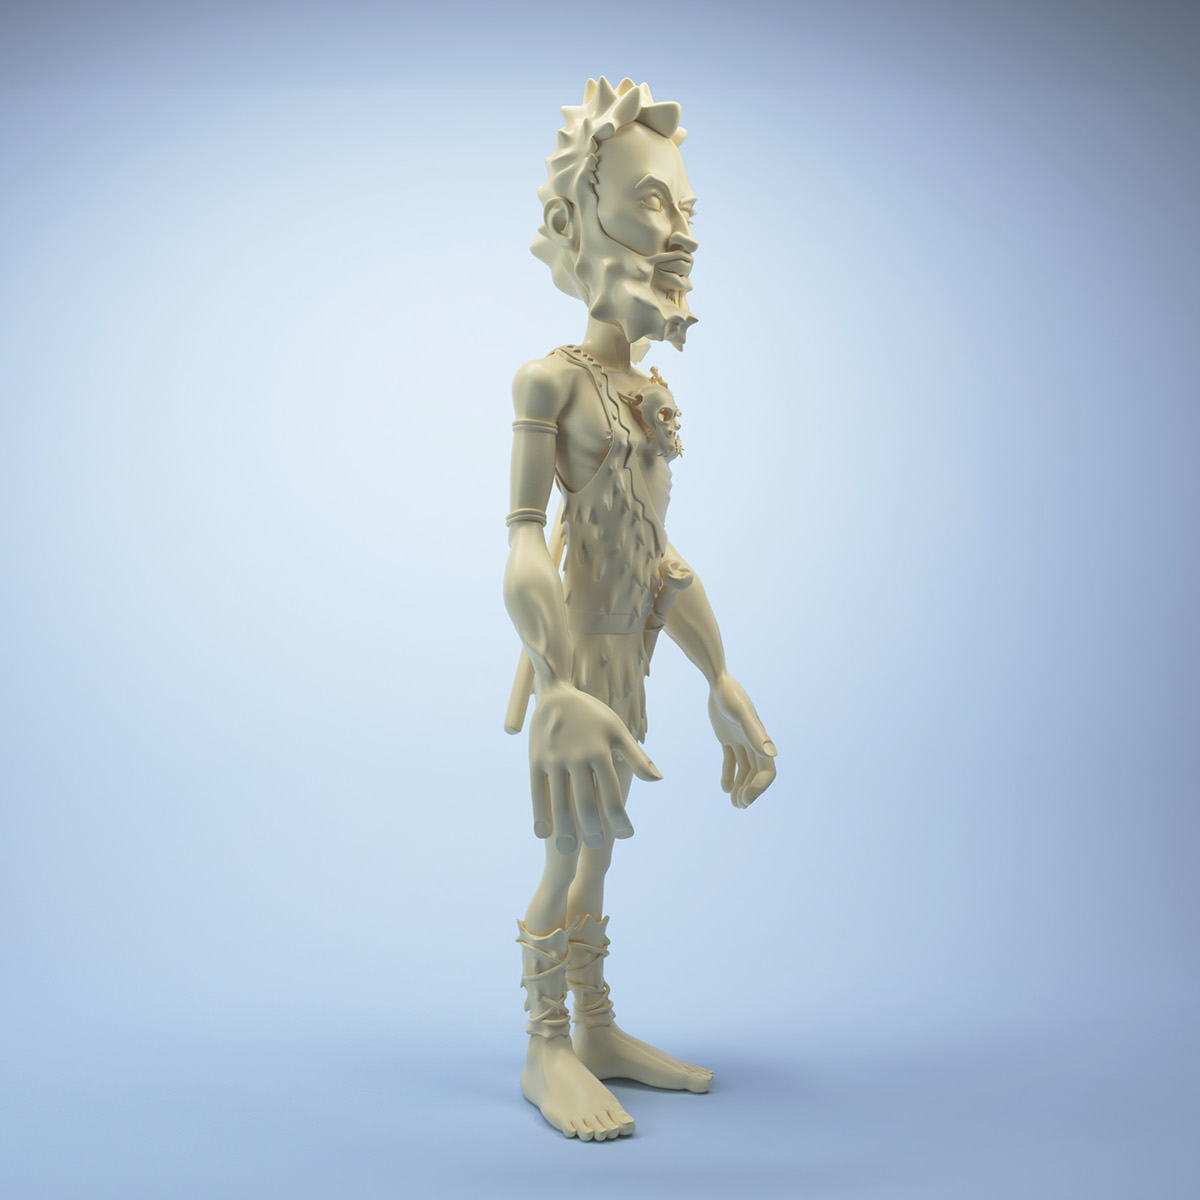 toy design characters Italy italian Negramaro Almossawi dekovic Fun cute cool anatomy 3D pirate caveman